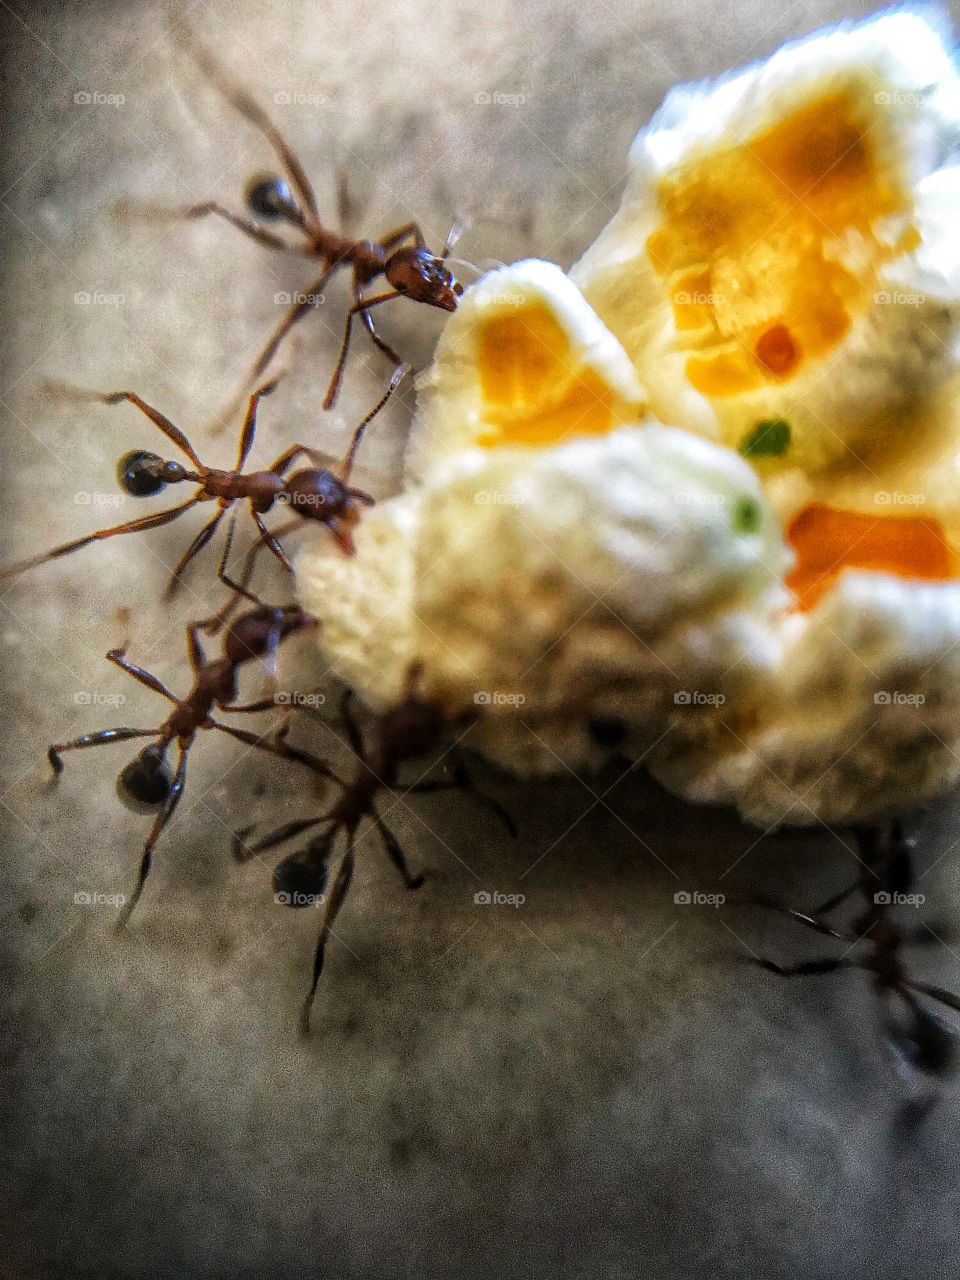 Ants moving popcorn 